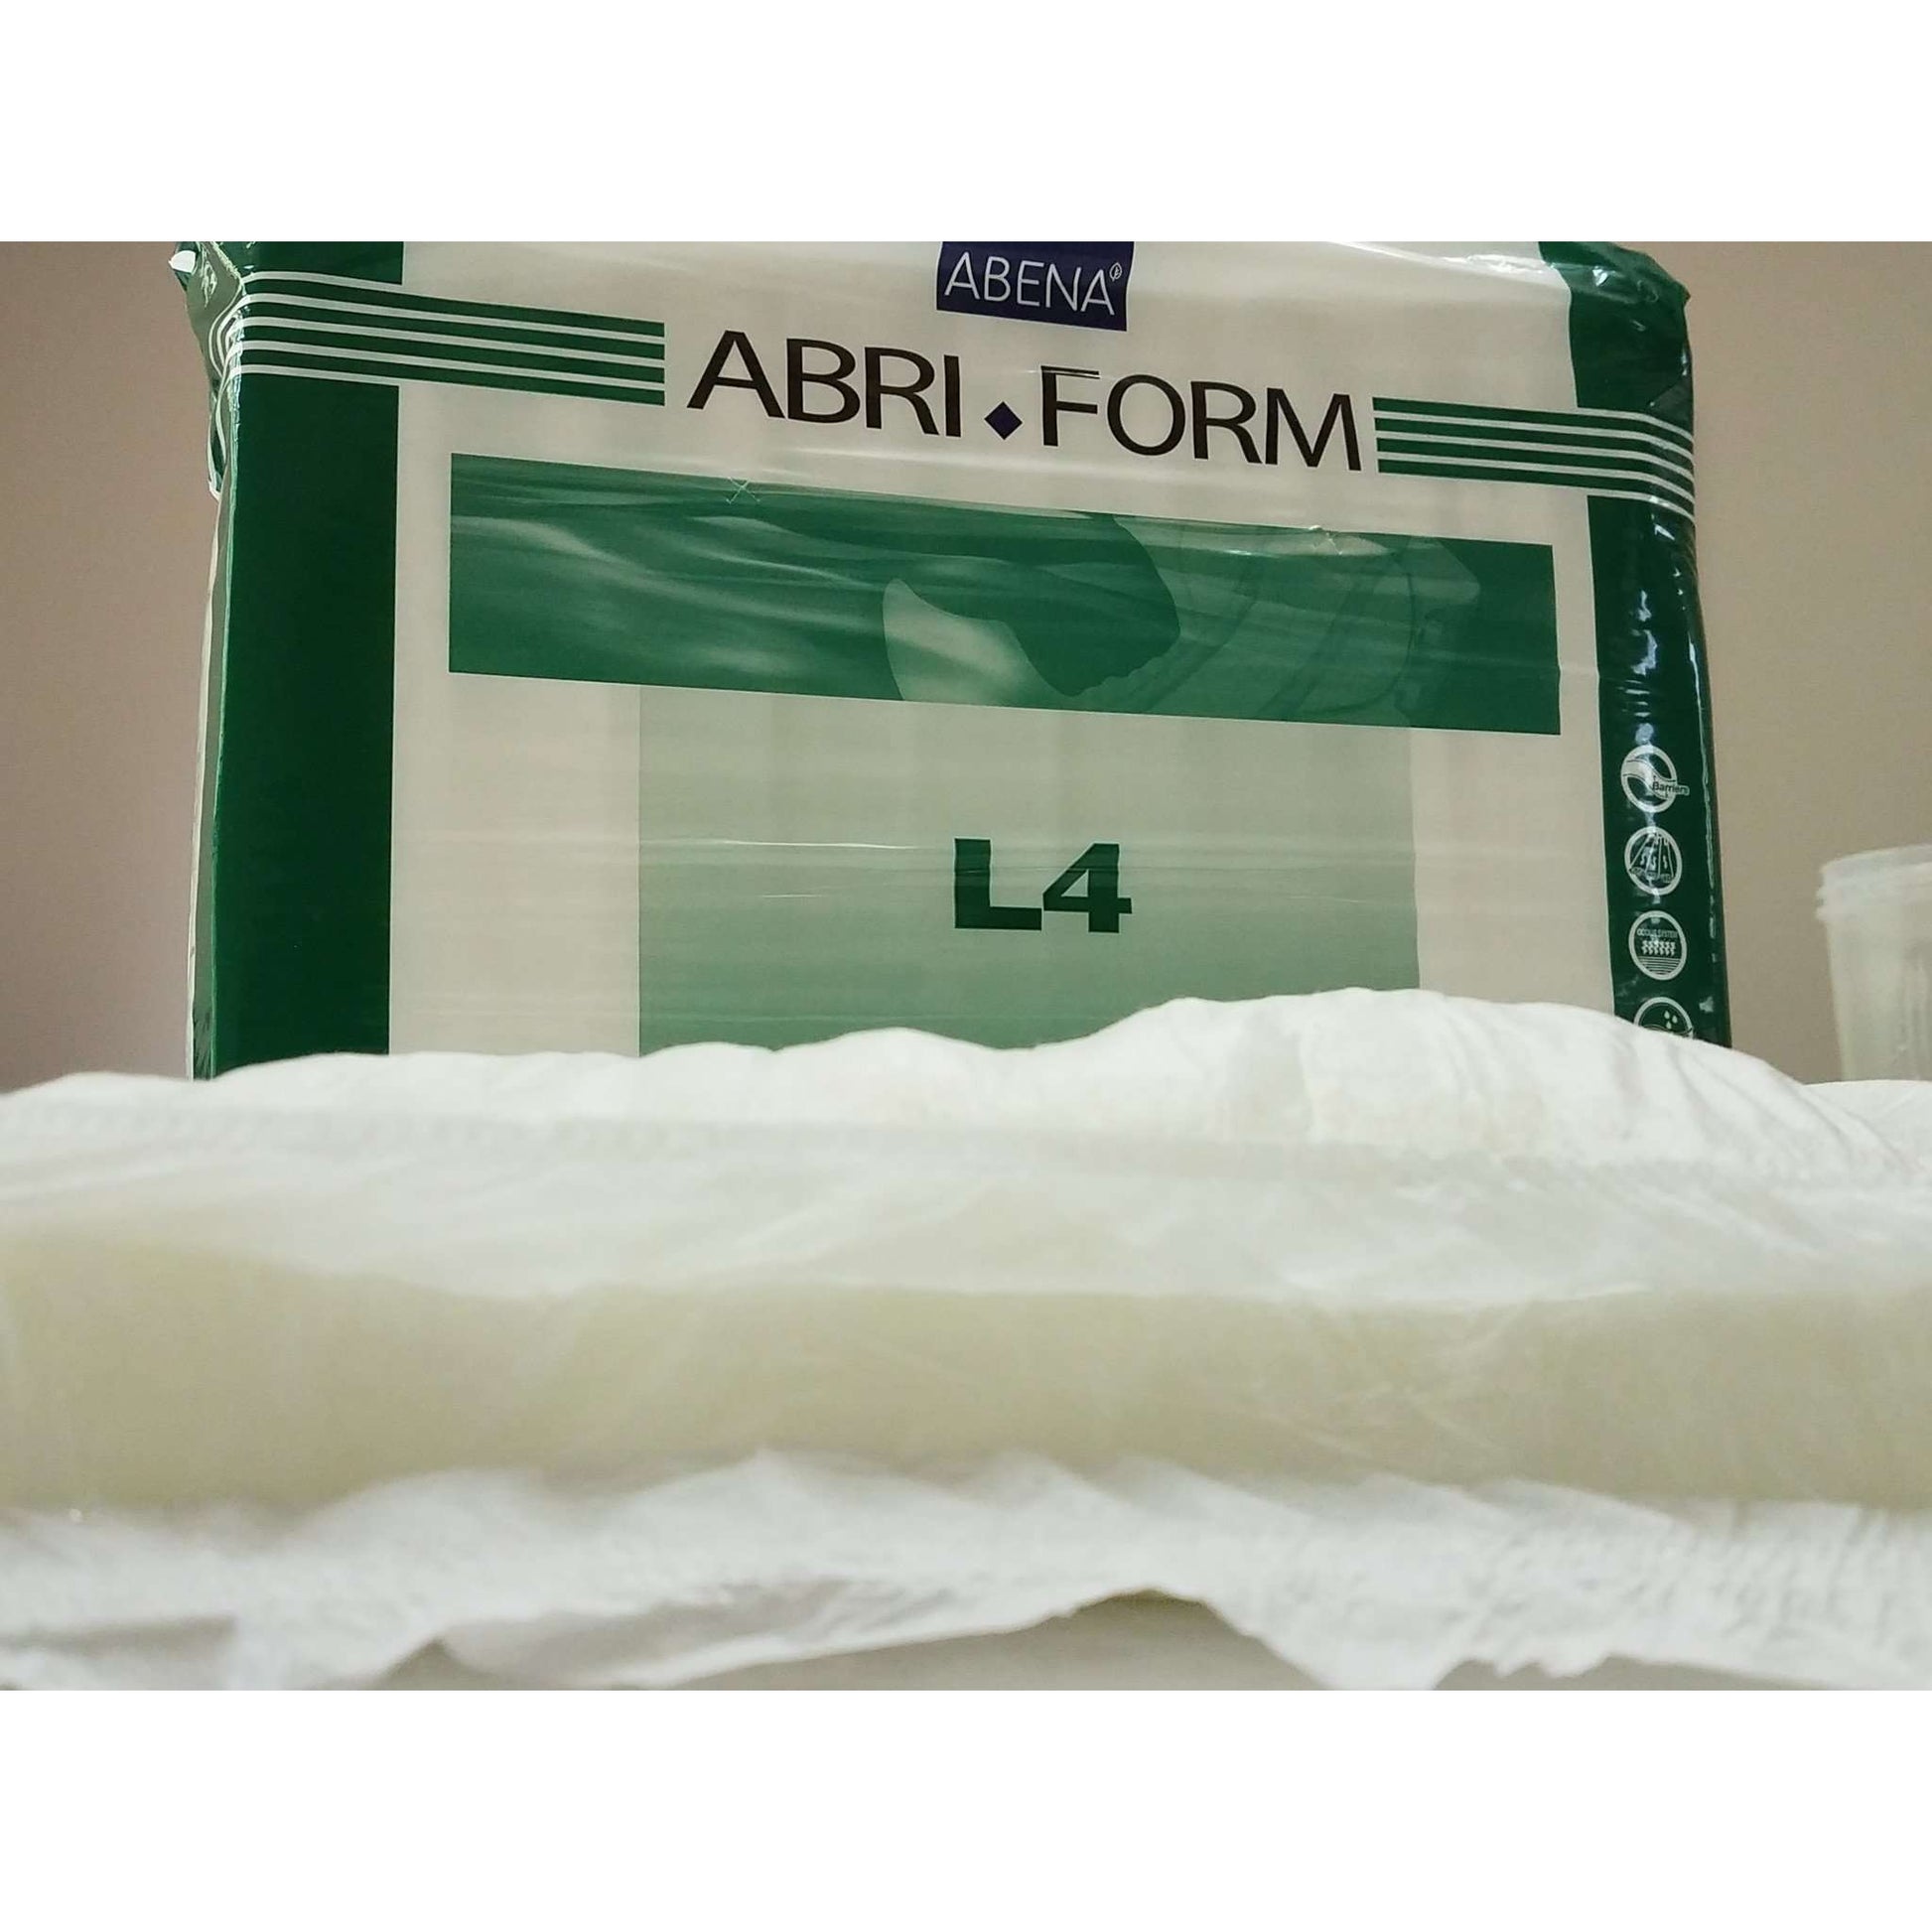 Abri-Form Comfort – ABENA USA